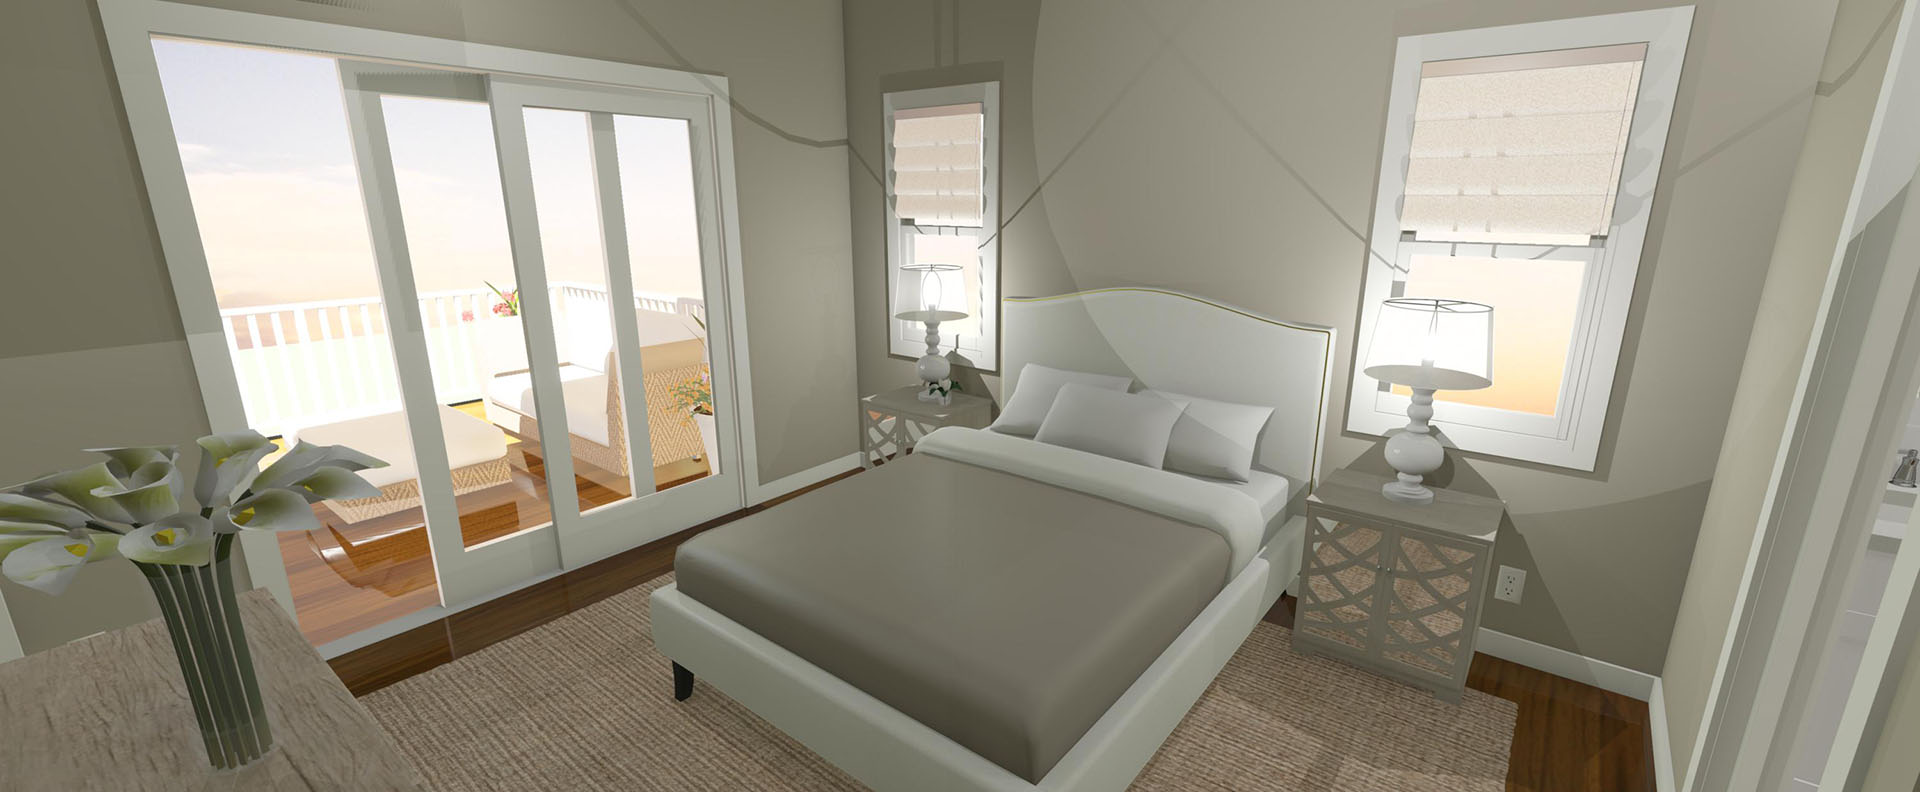 Nohona interior master bedroom